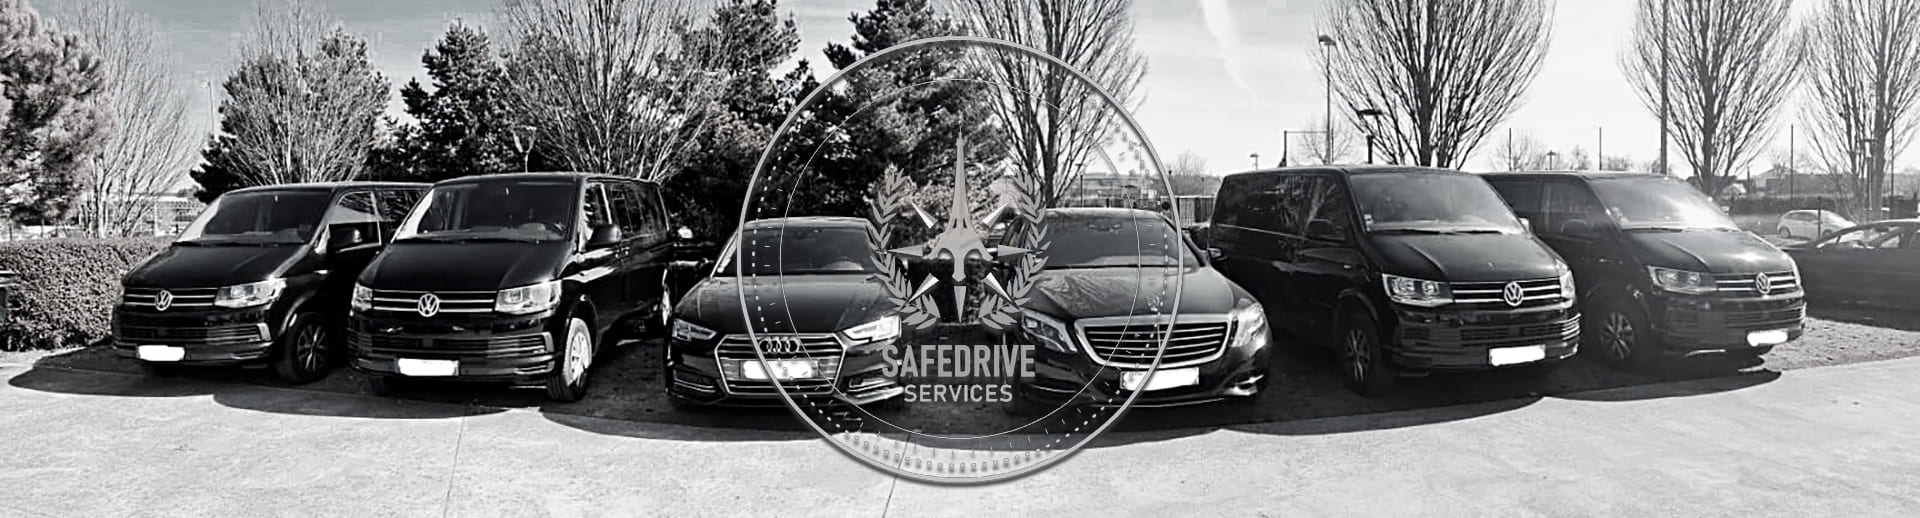 SafeDrive Services